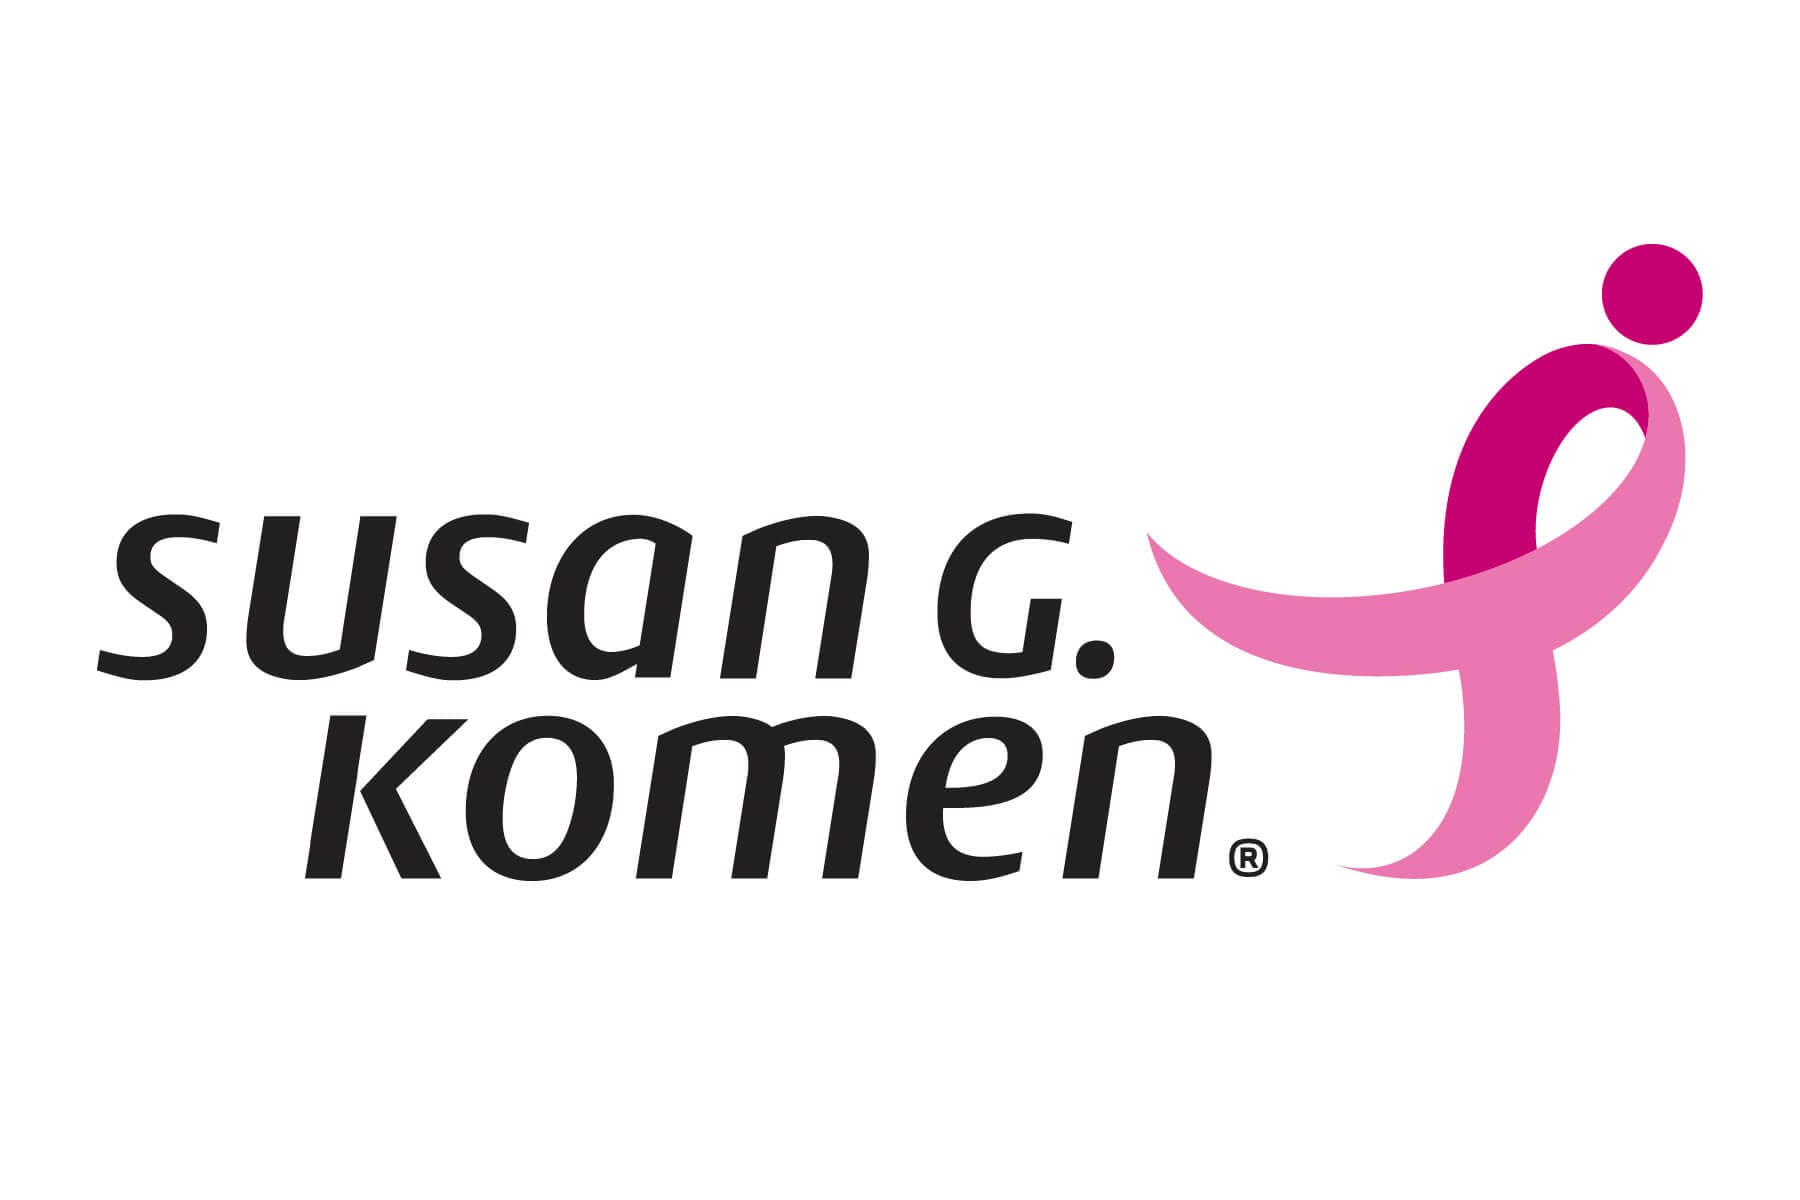 Park at Fine to Support Susan G. Komen